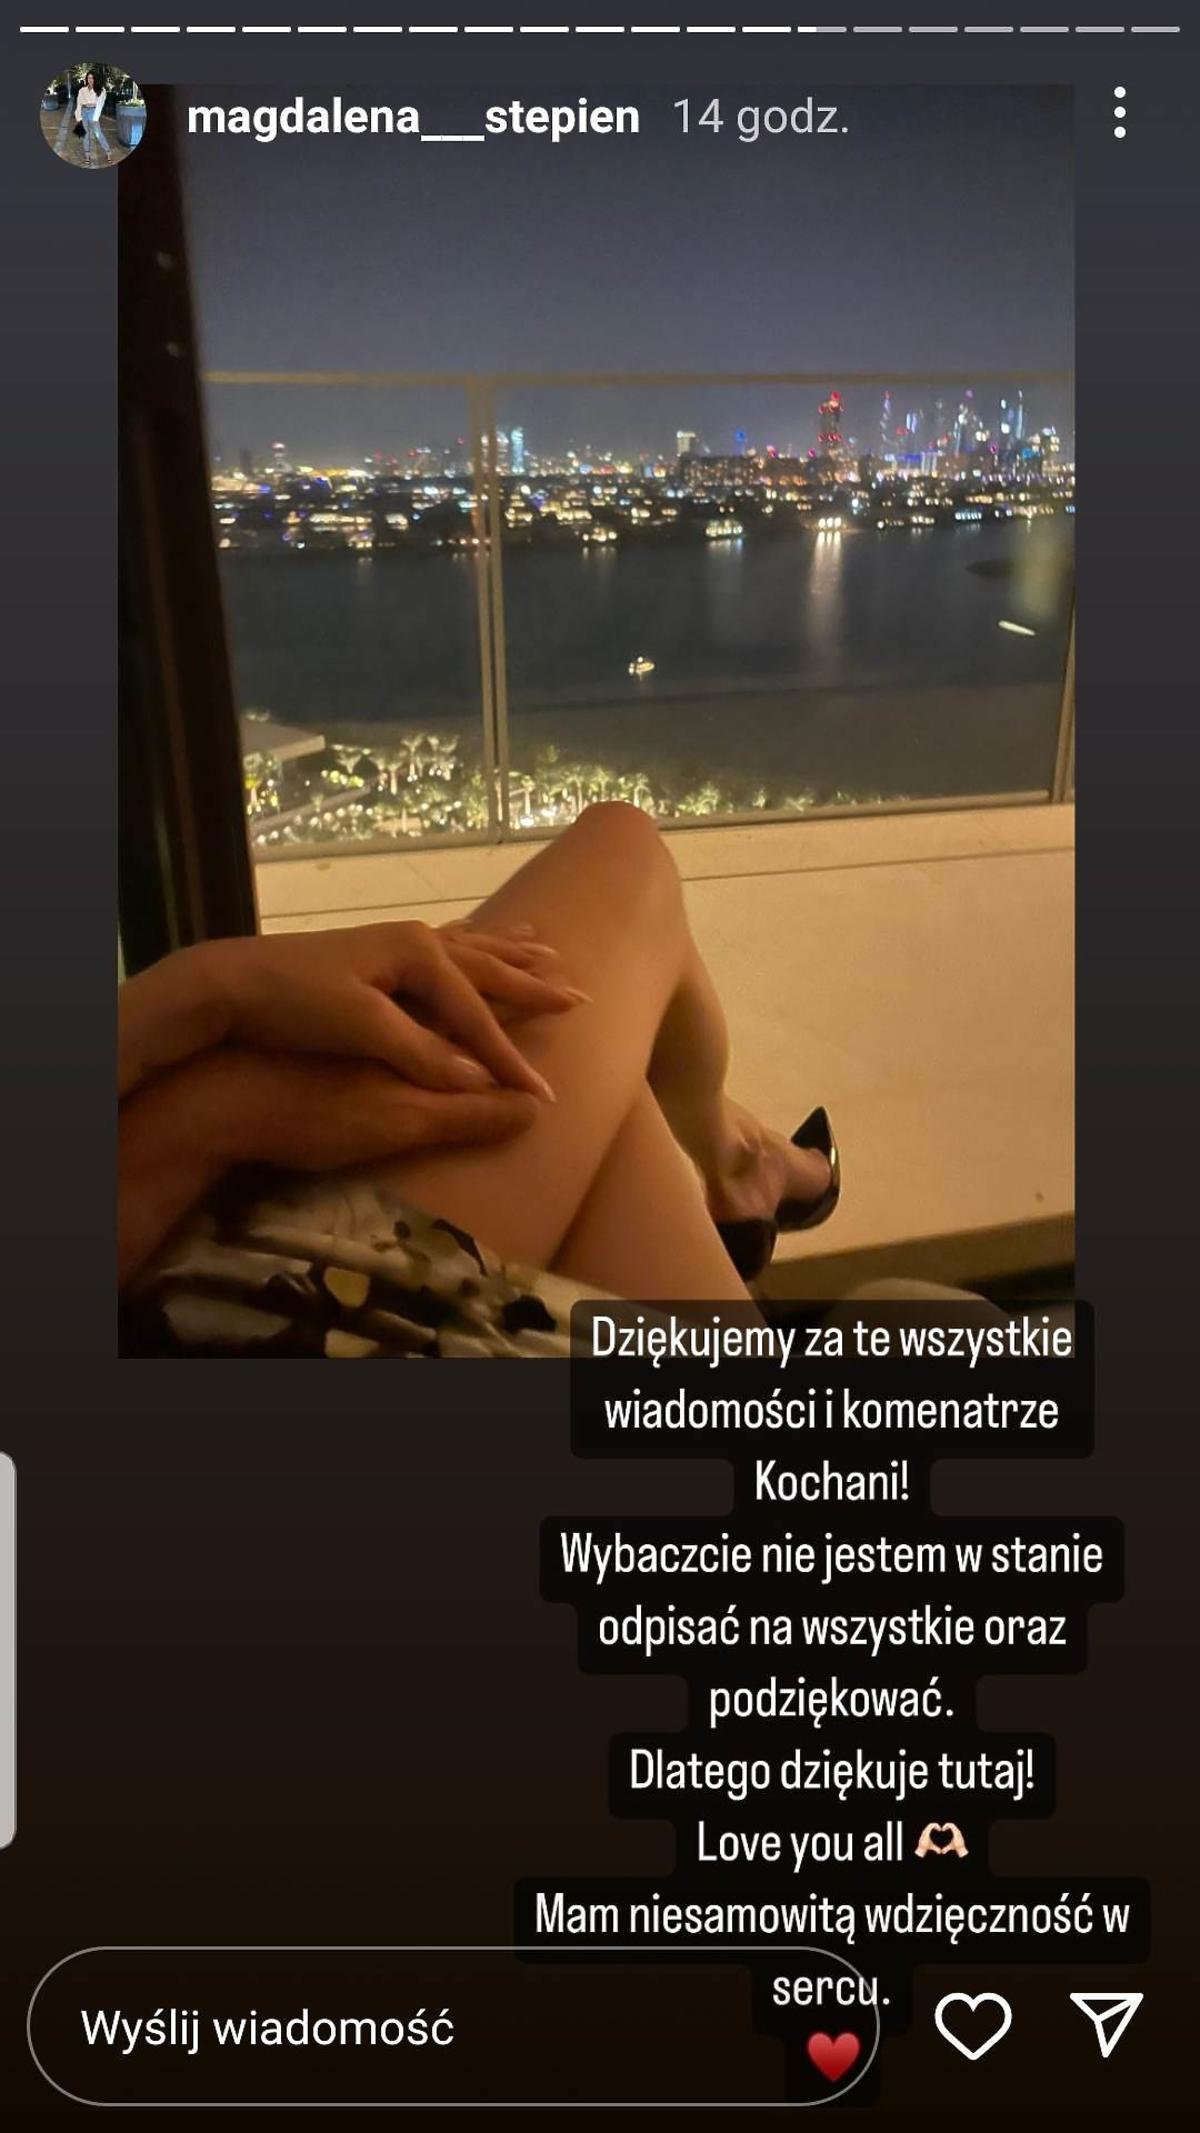 Magdalena Stępień na randce z nowym partnerem